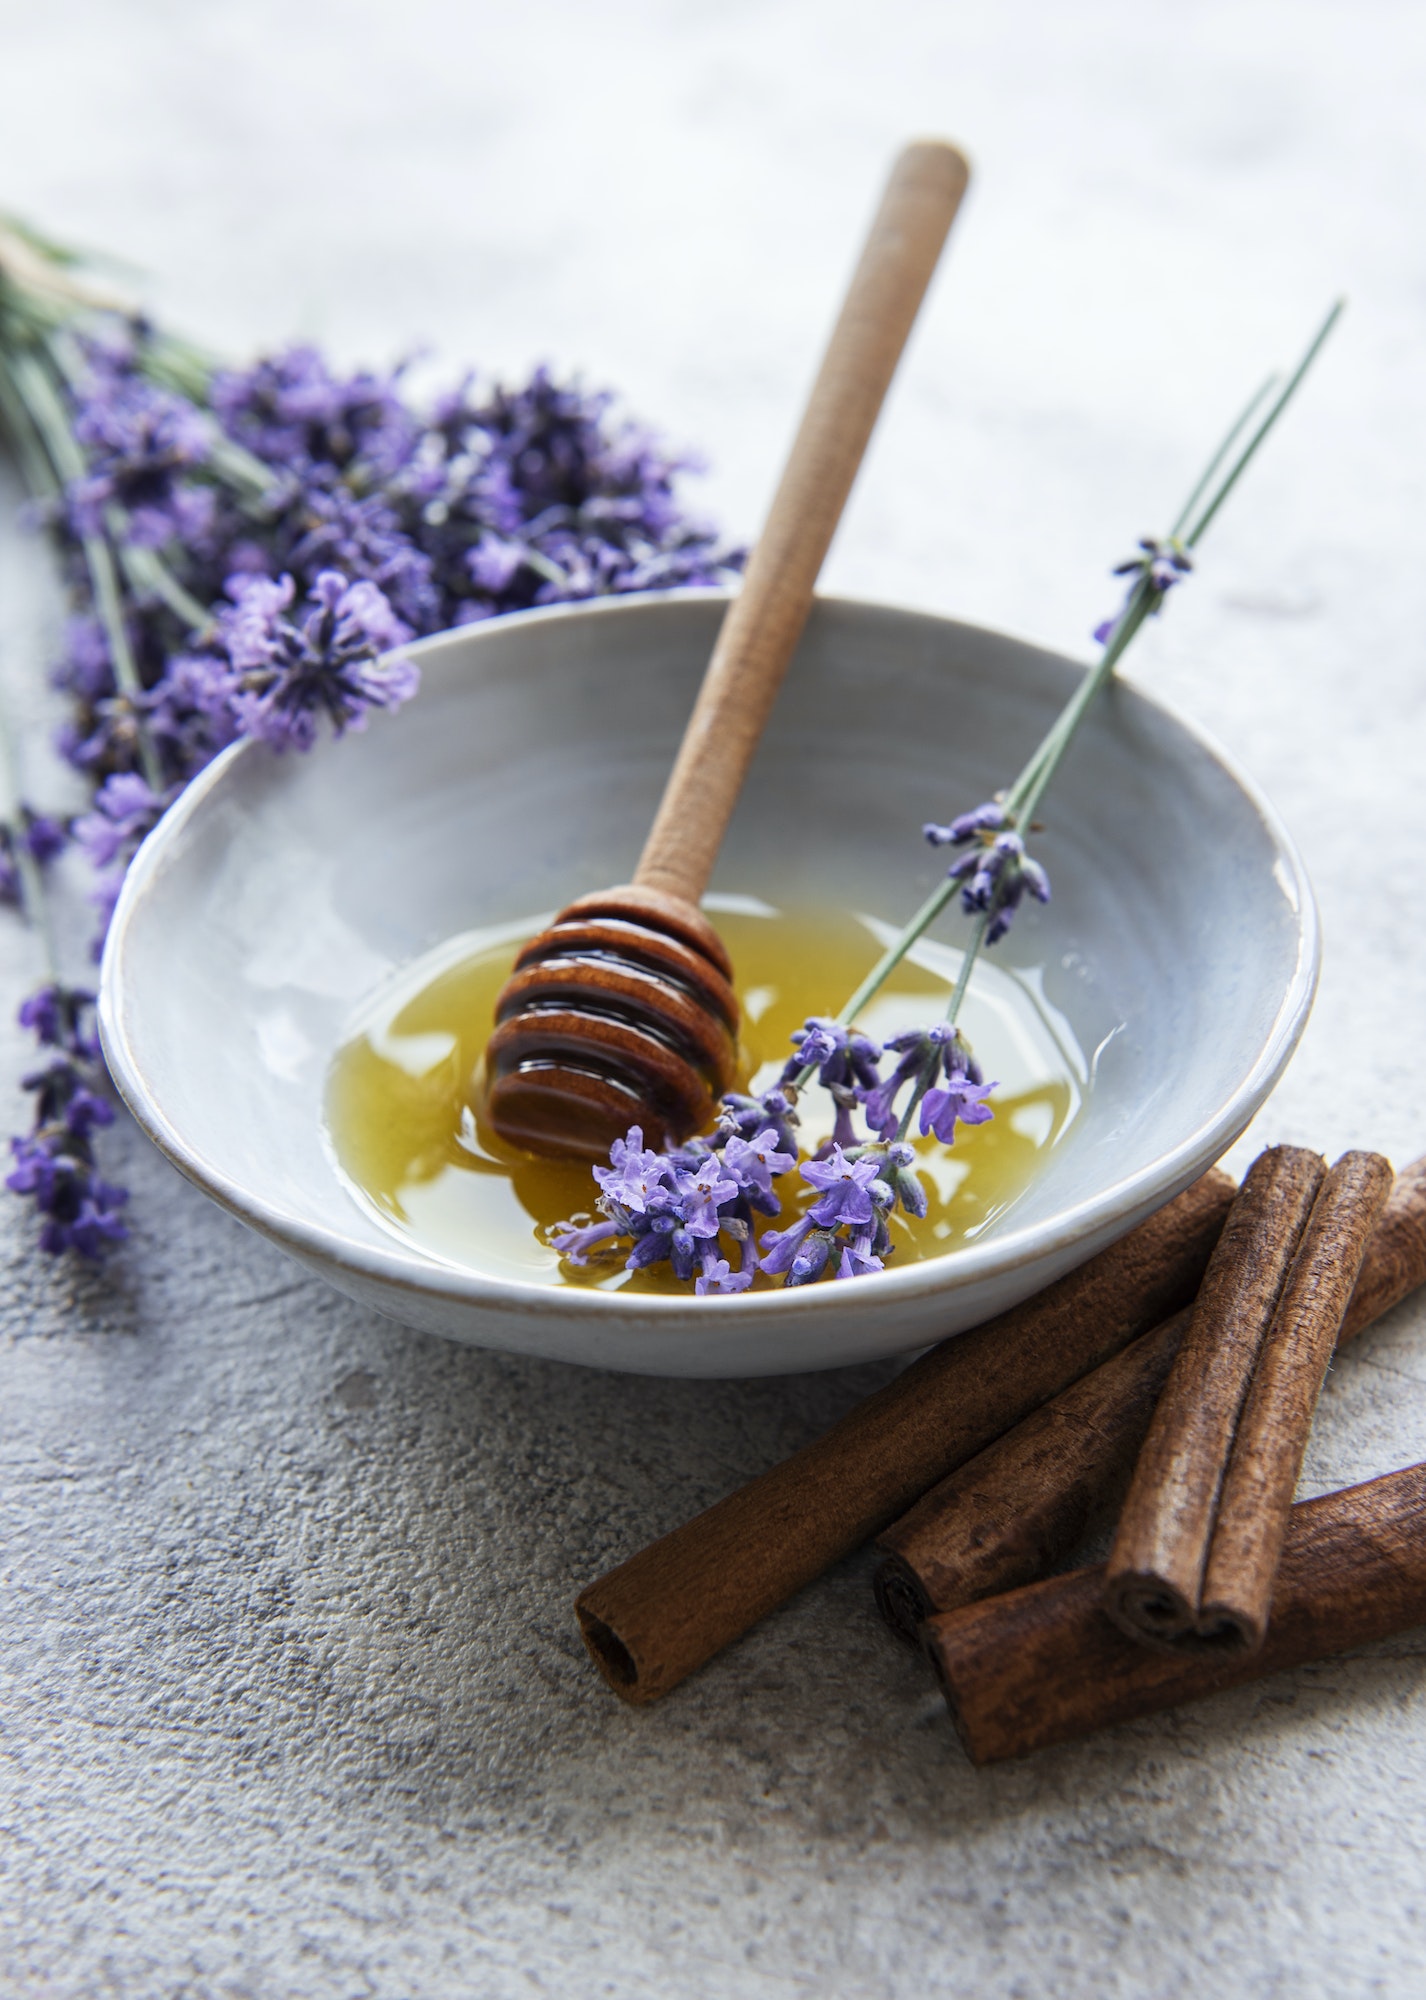 Honey and fresh lavender flowers